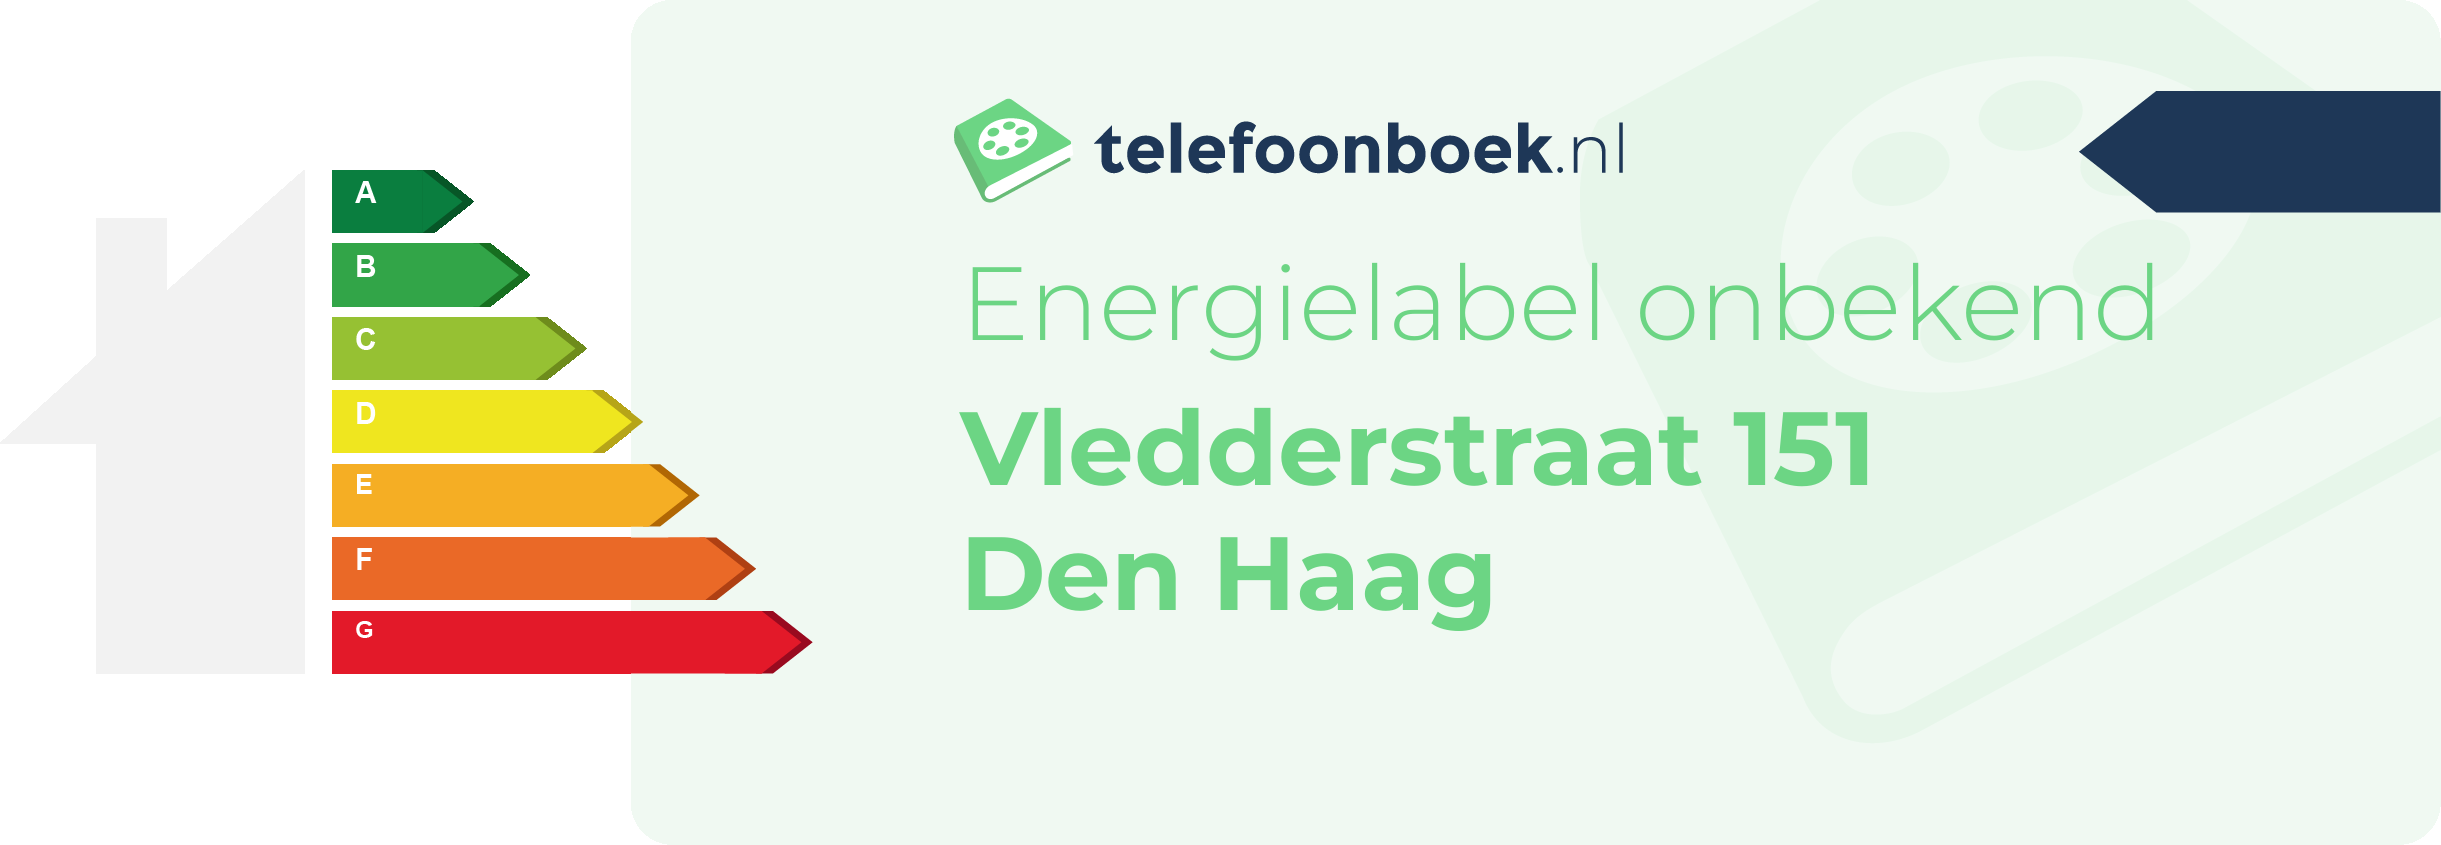 Energielabel Vledderstraat 151 Den Haag